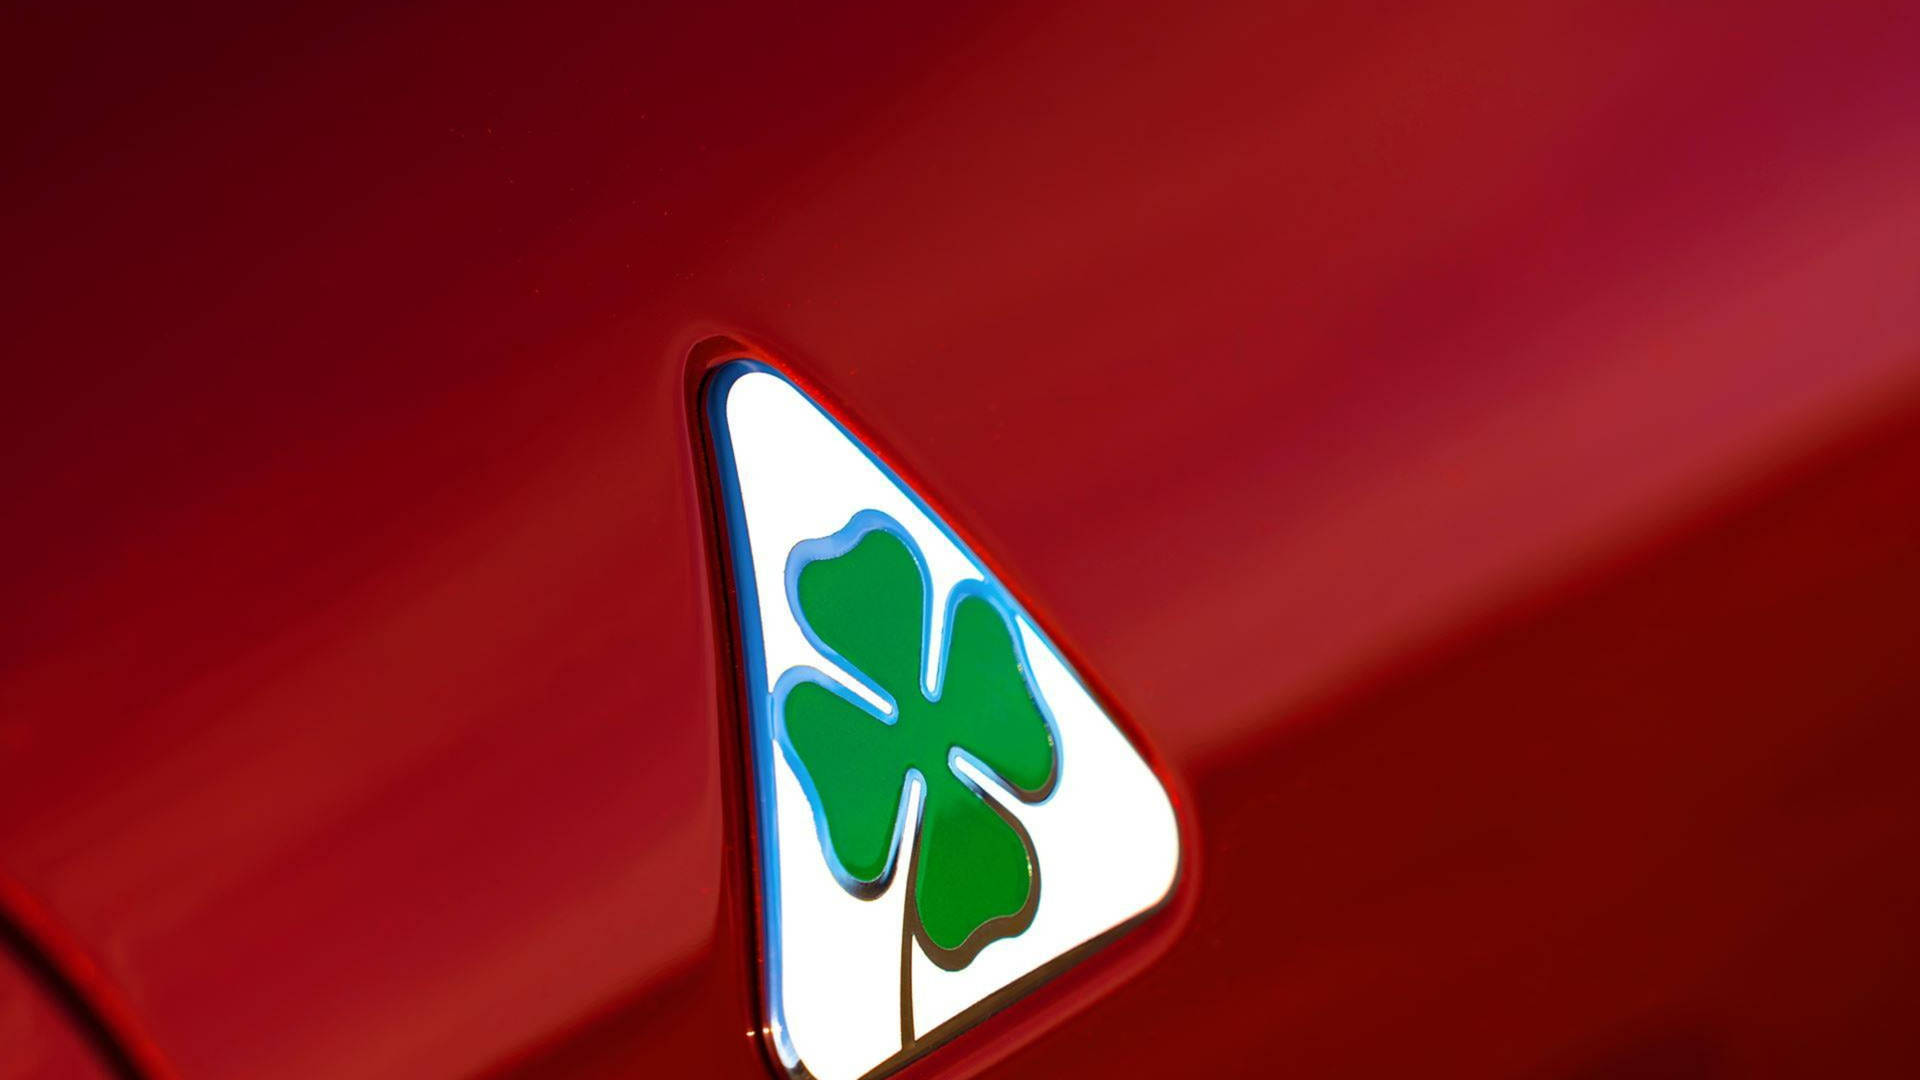 Alfa Romeo Quadrifoglio green four-leaf clover symbol wallpaper.